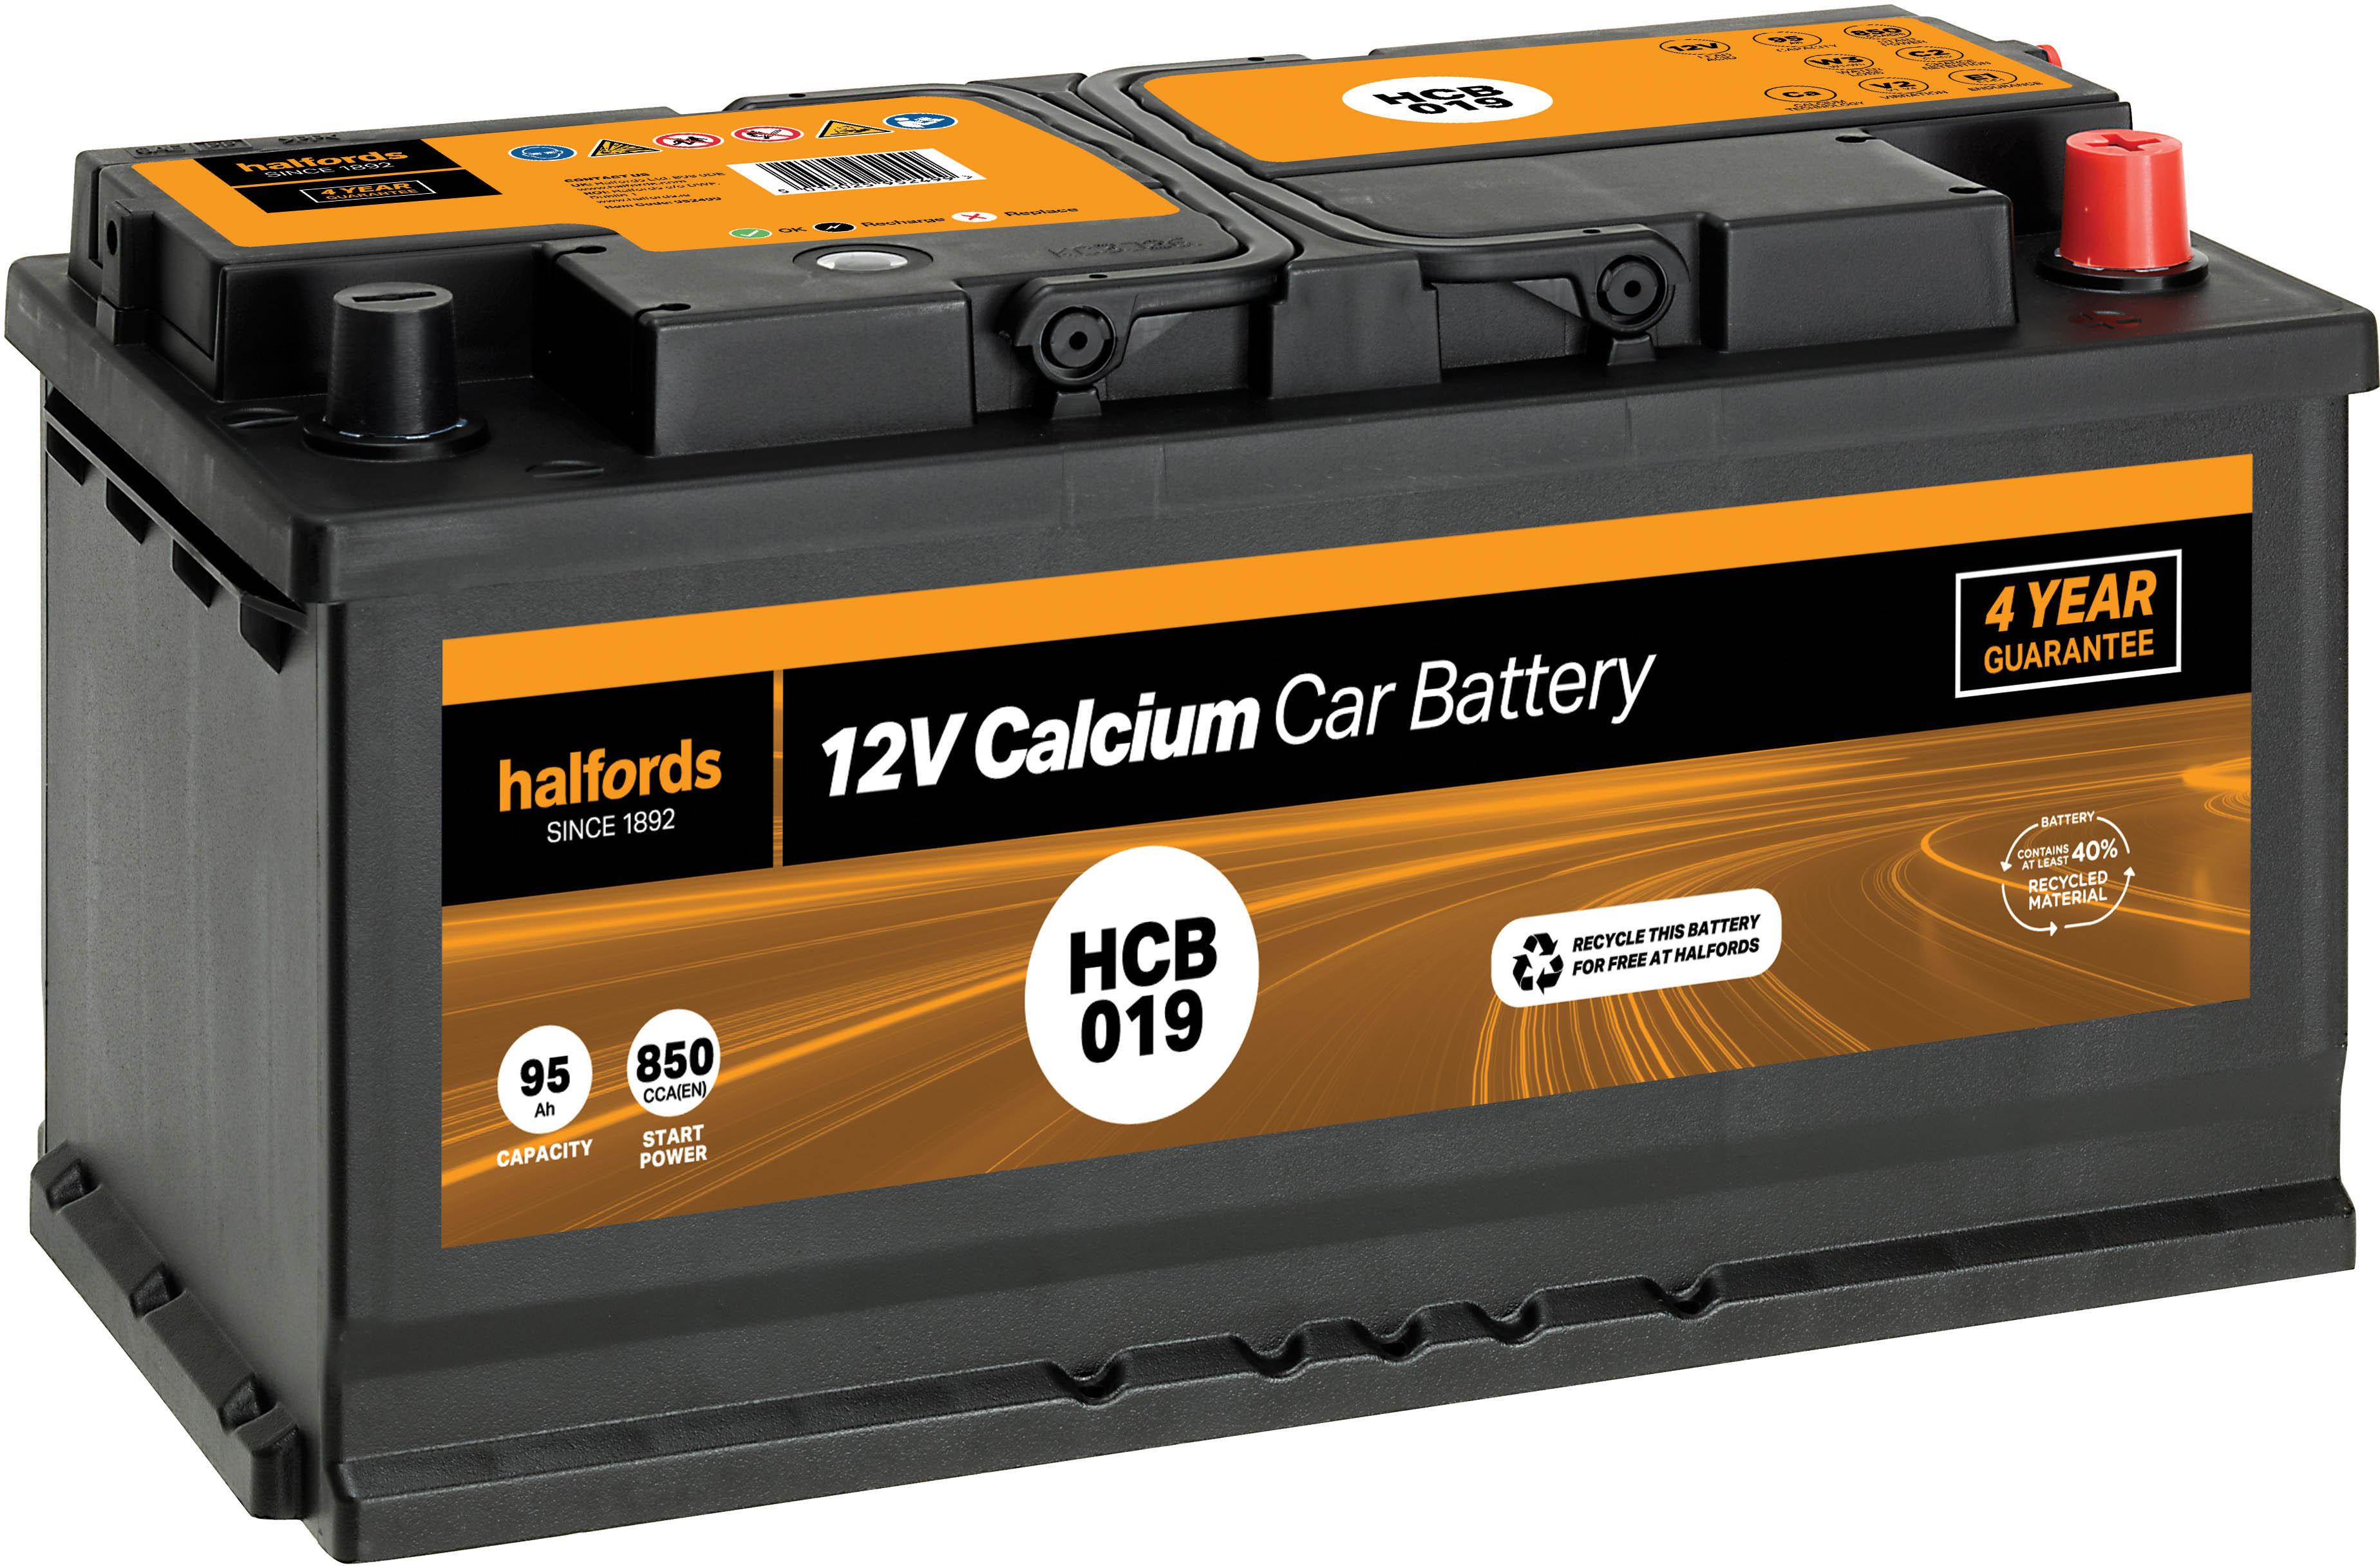 Halfords Hb019 Lead Acid 12V Car Battery 3 Year Guarantee